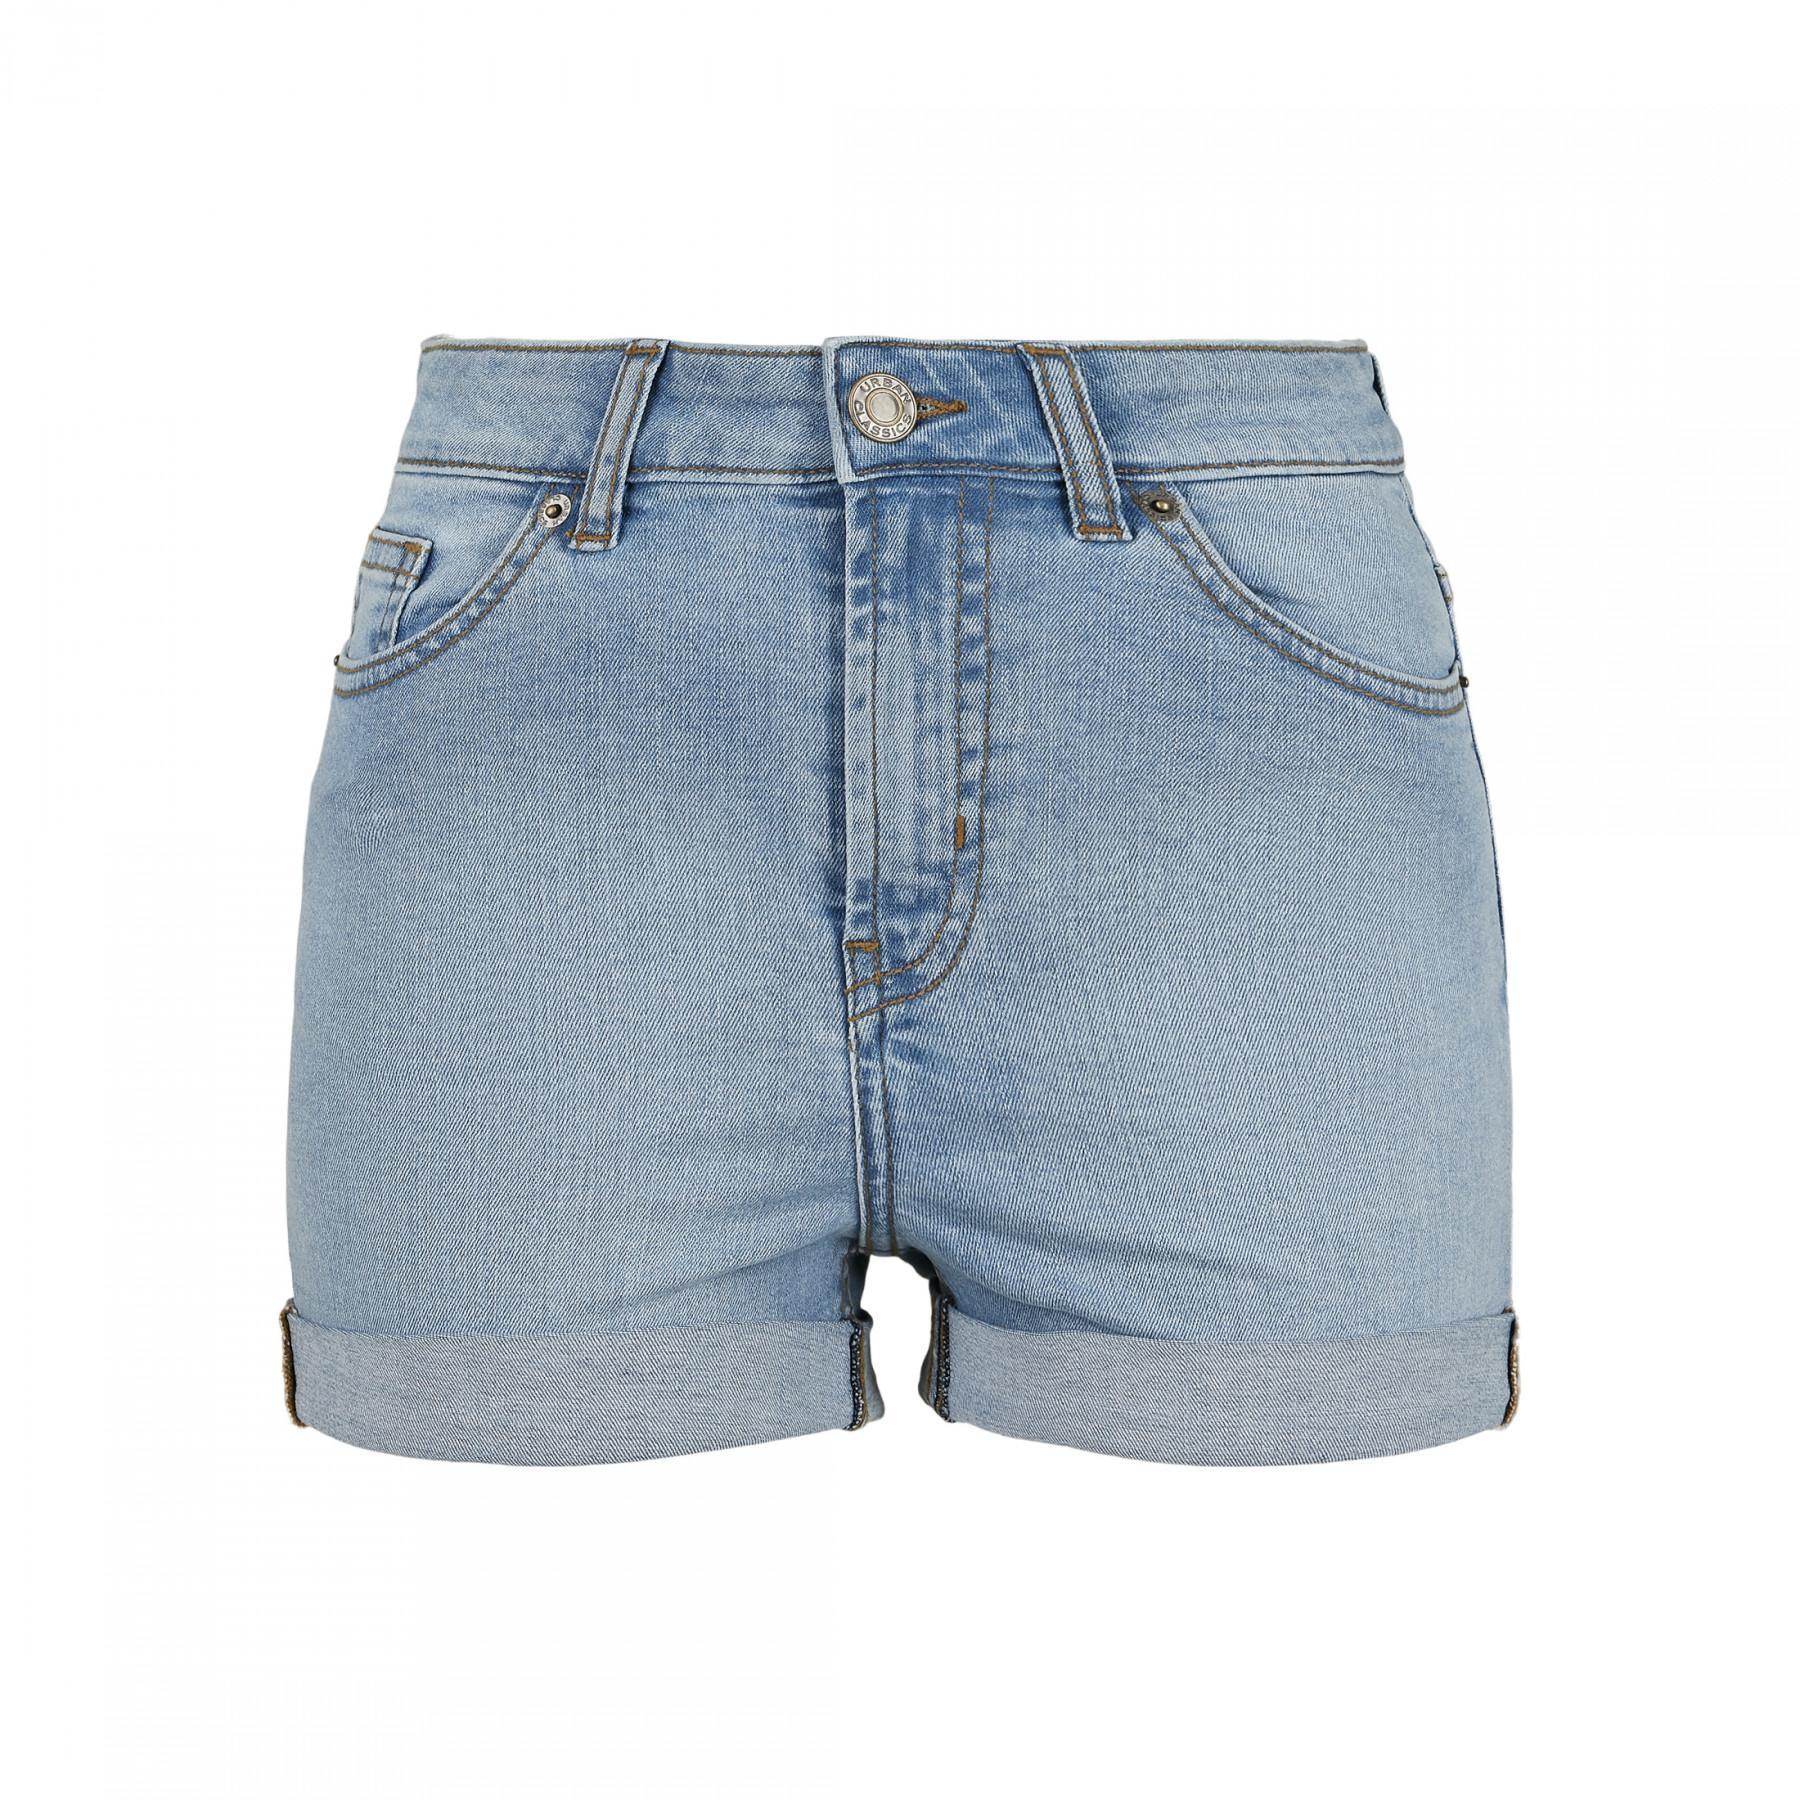 Women's shorts Urban Classic pocket